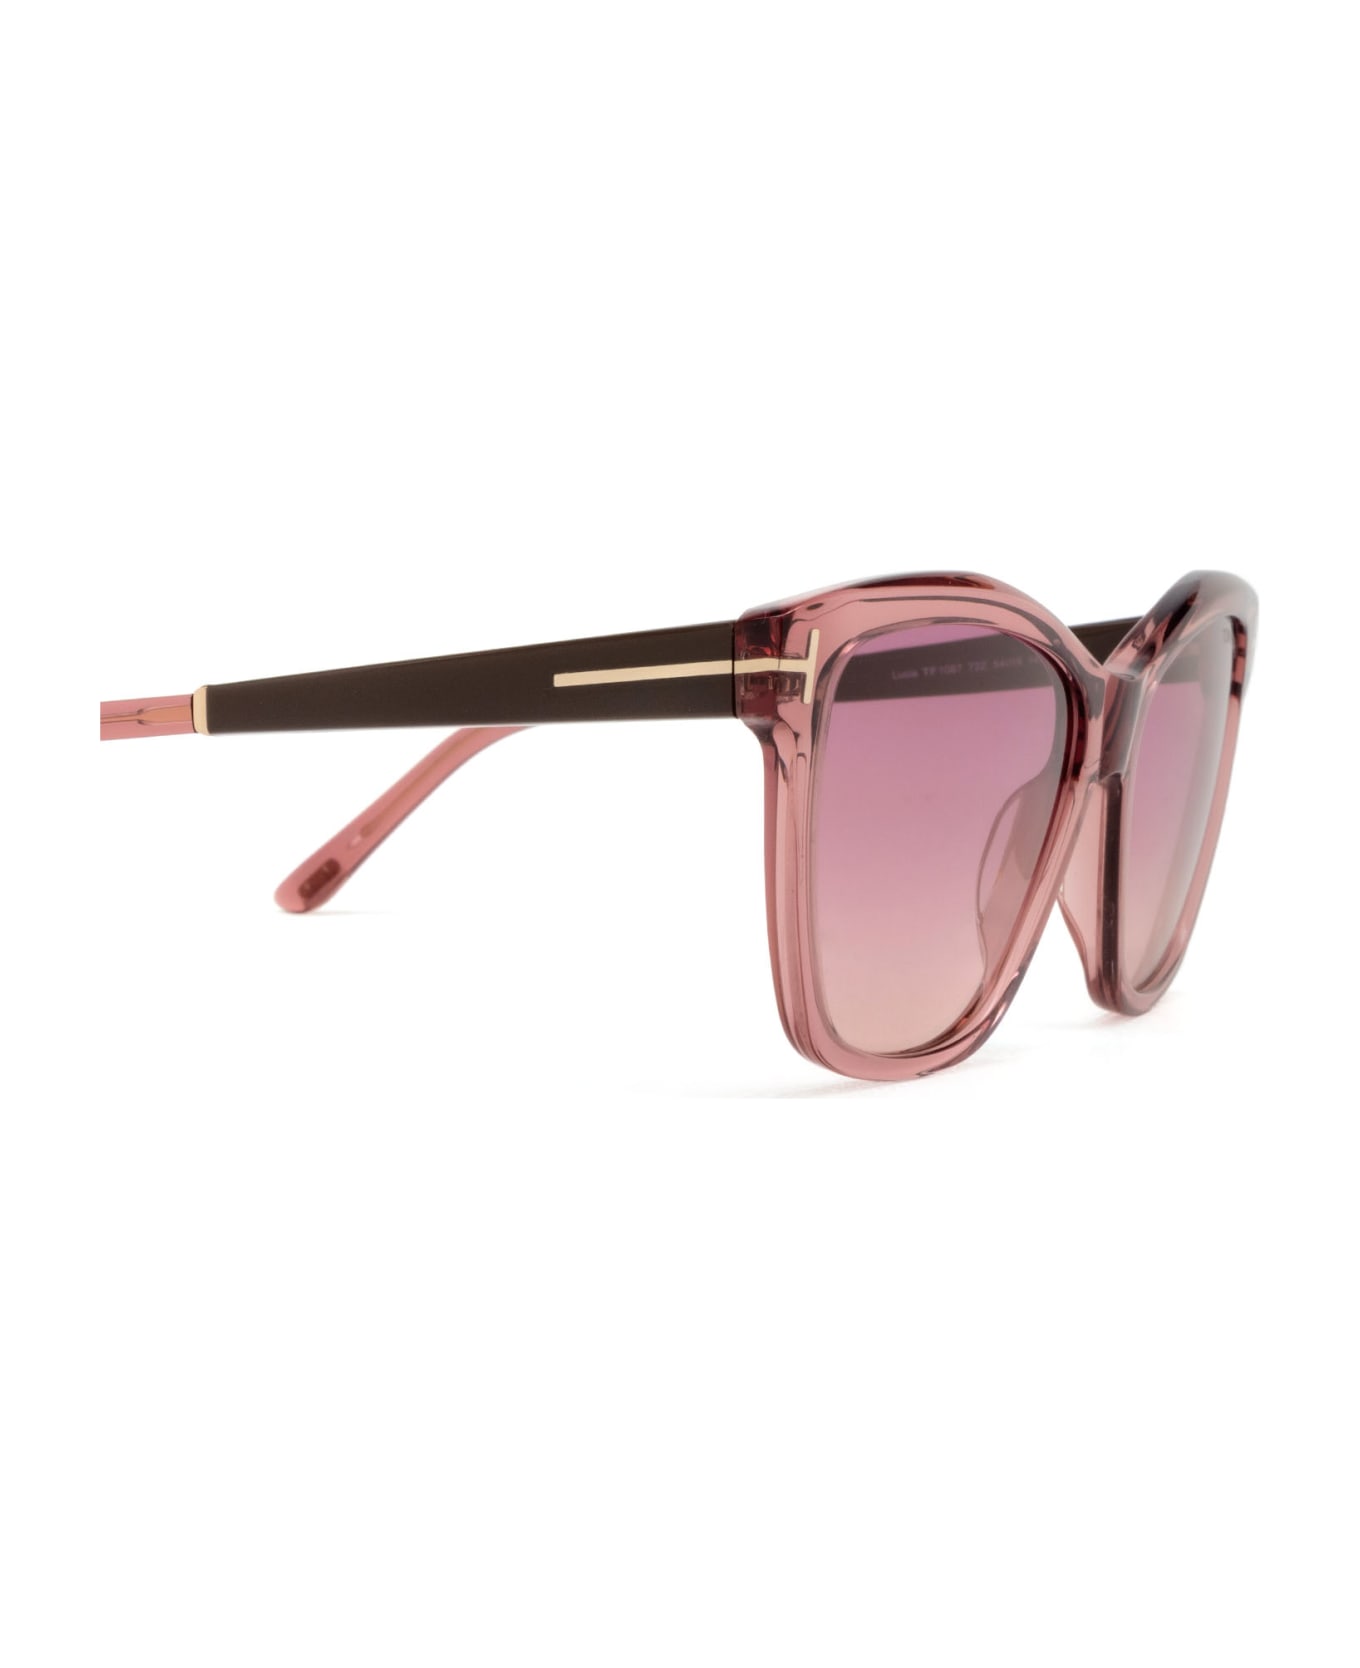 Tom Ford Eyewear Ft1087 Shiny Pink Sunglasses - Shiny Pink